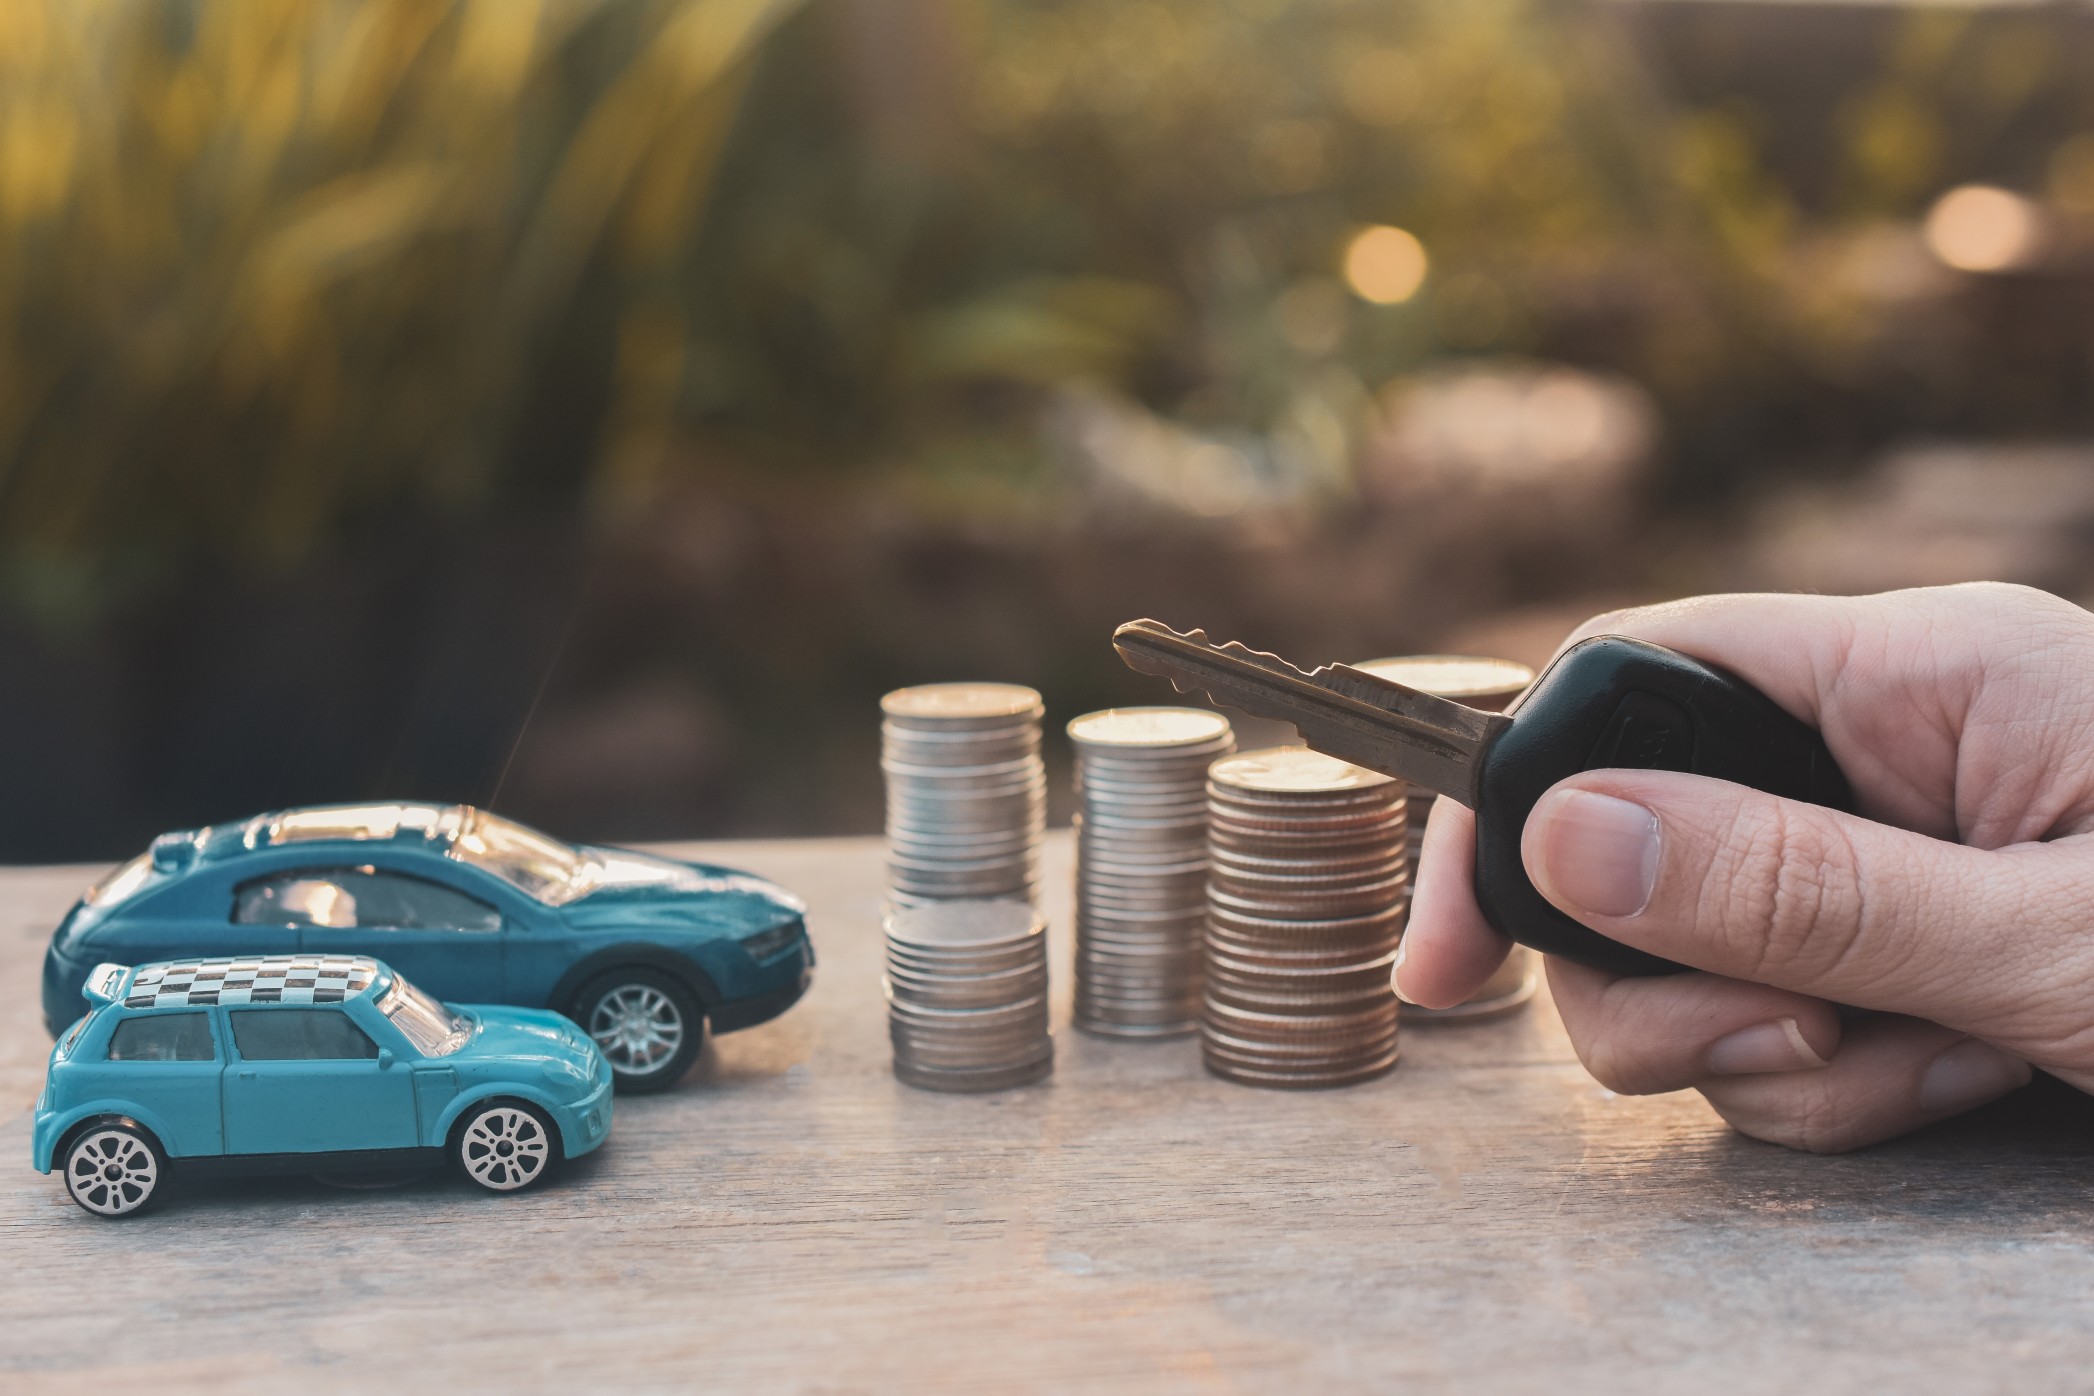 Car Insurance Calculator: Estimate Your Cost - NerdWallet